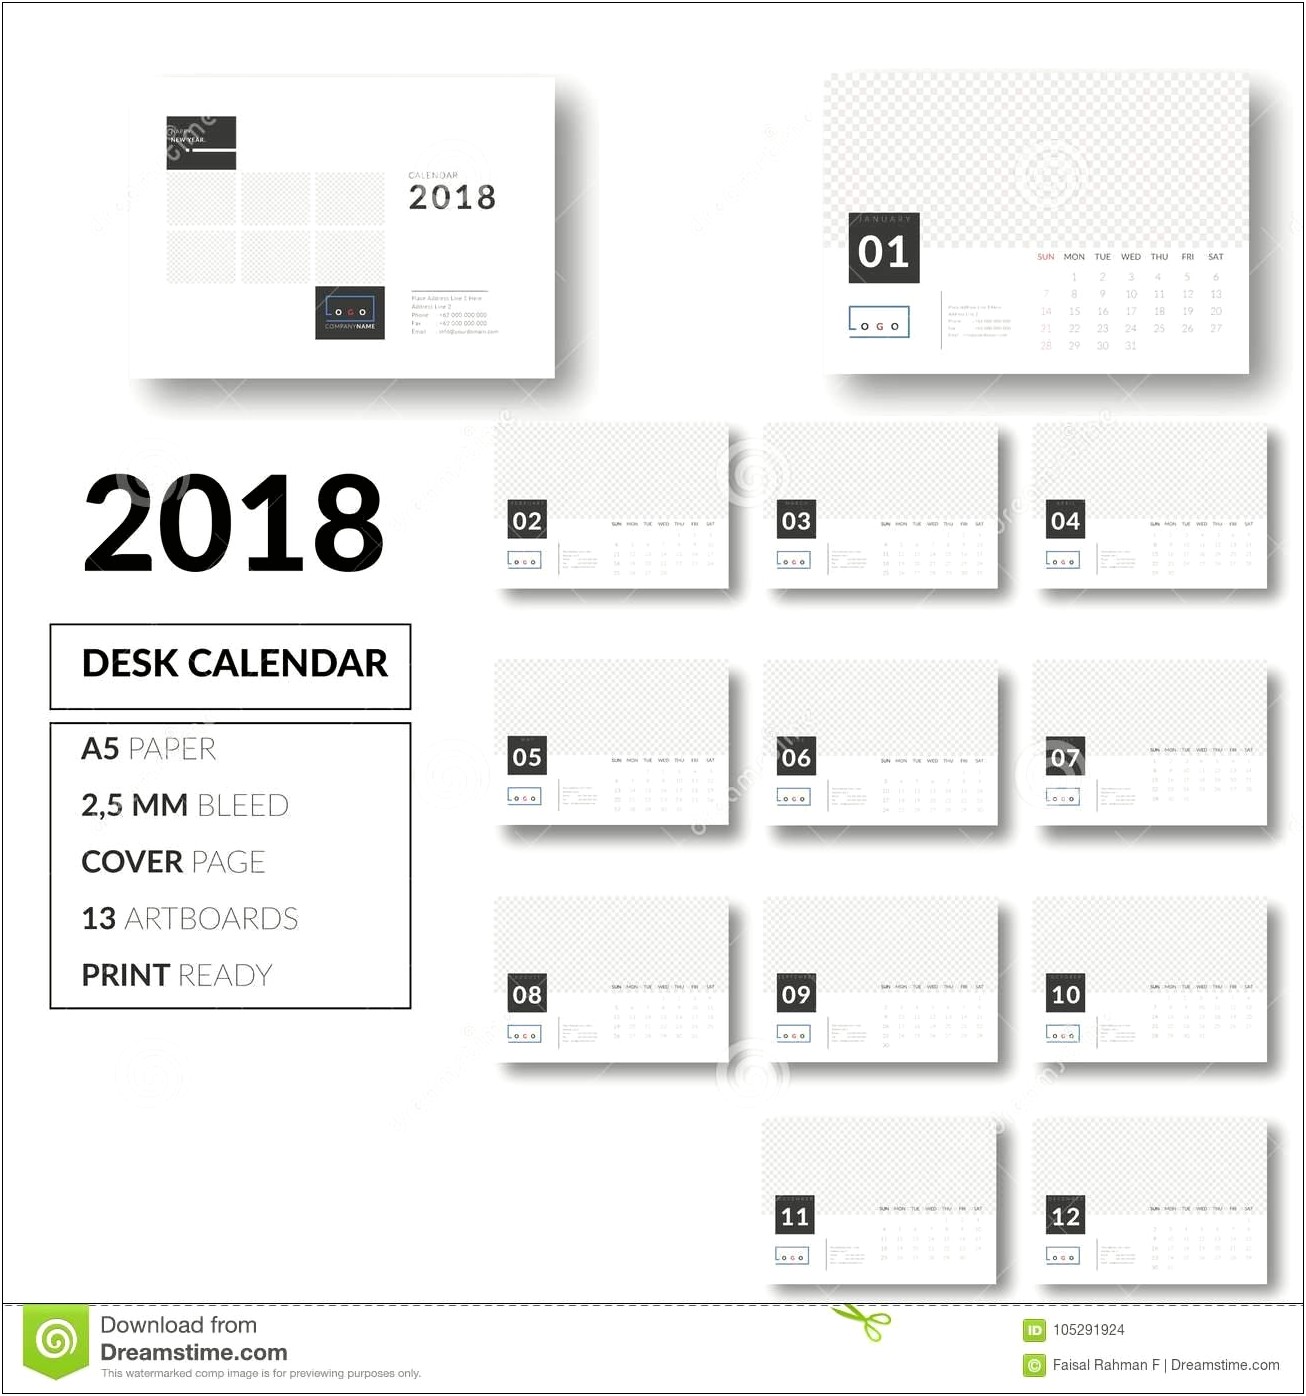 Desk Calendar Template 2018 Free Download